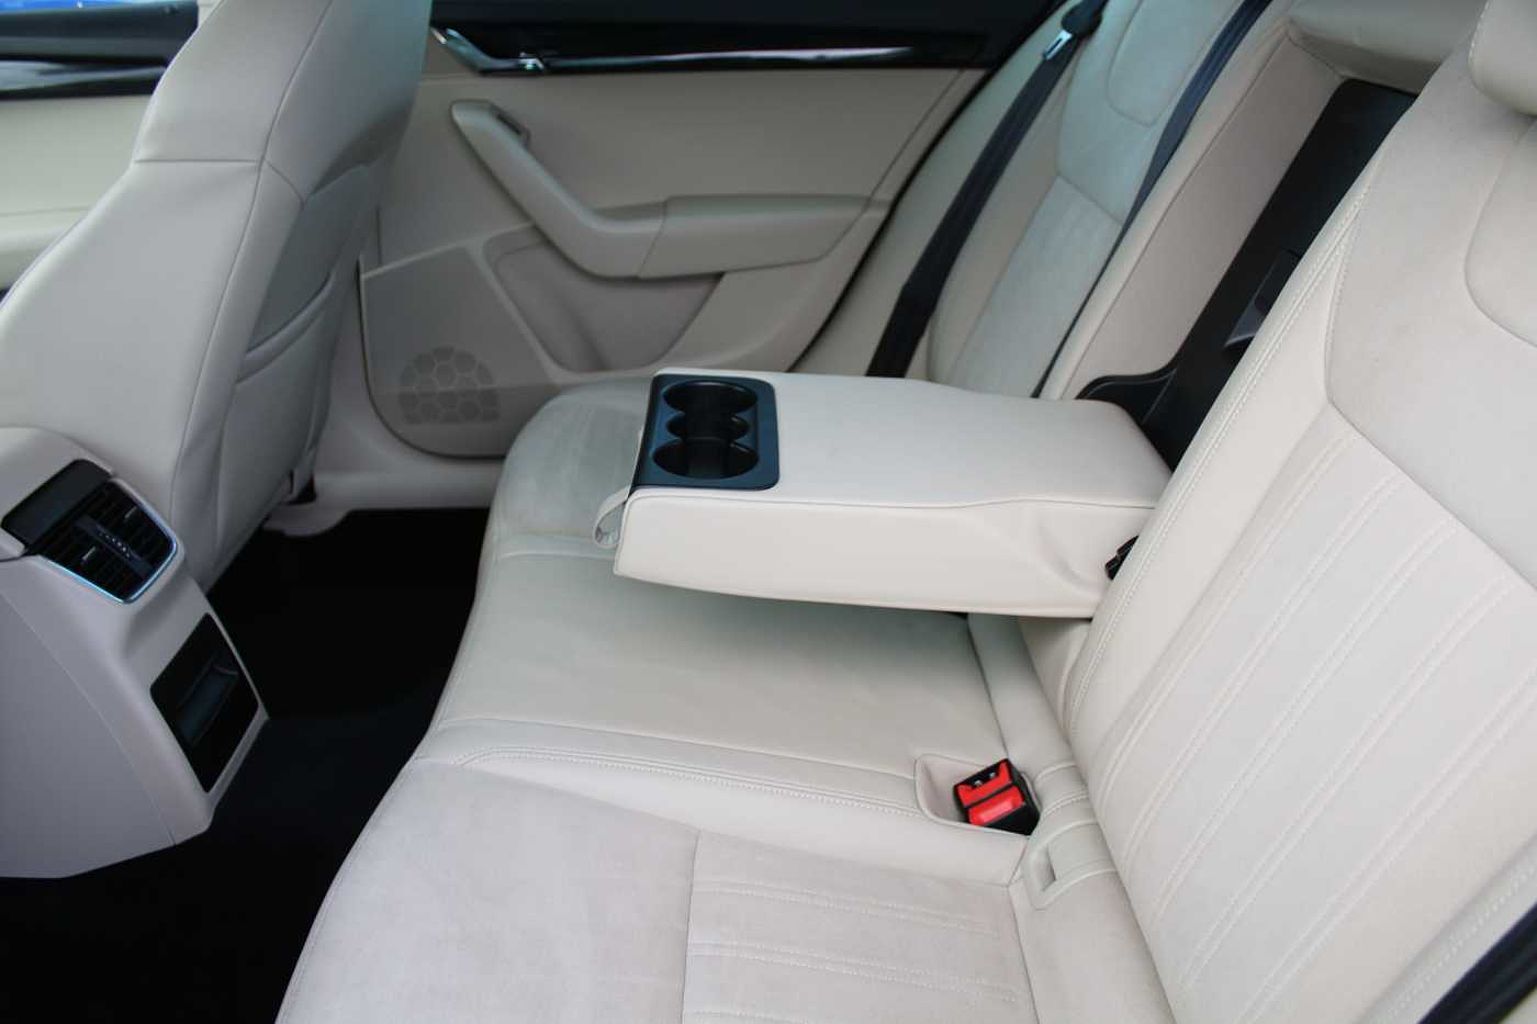 SKODA Octavia Hatchback 1.5 TSI SE L (150PS)